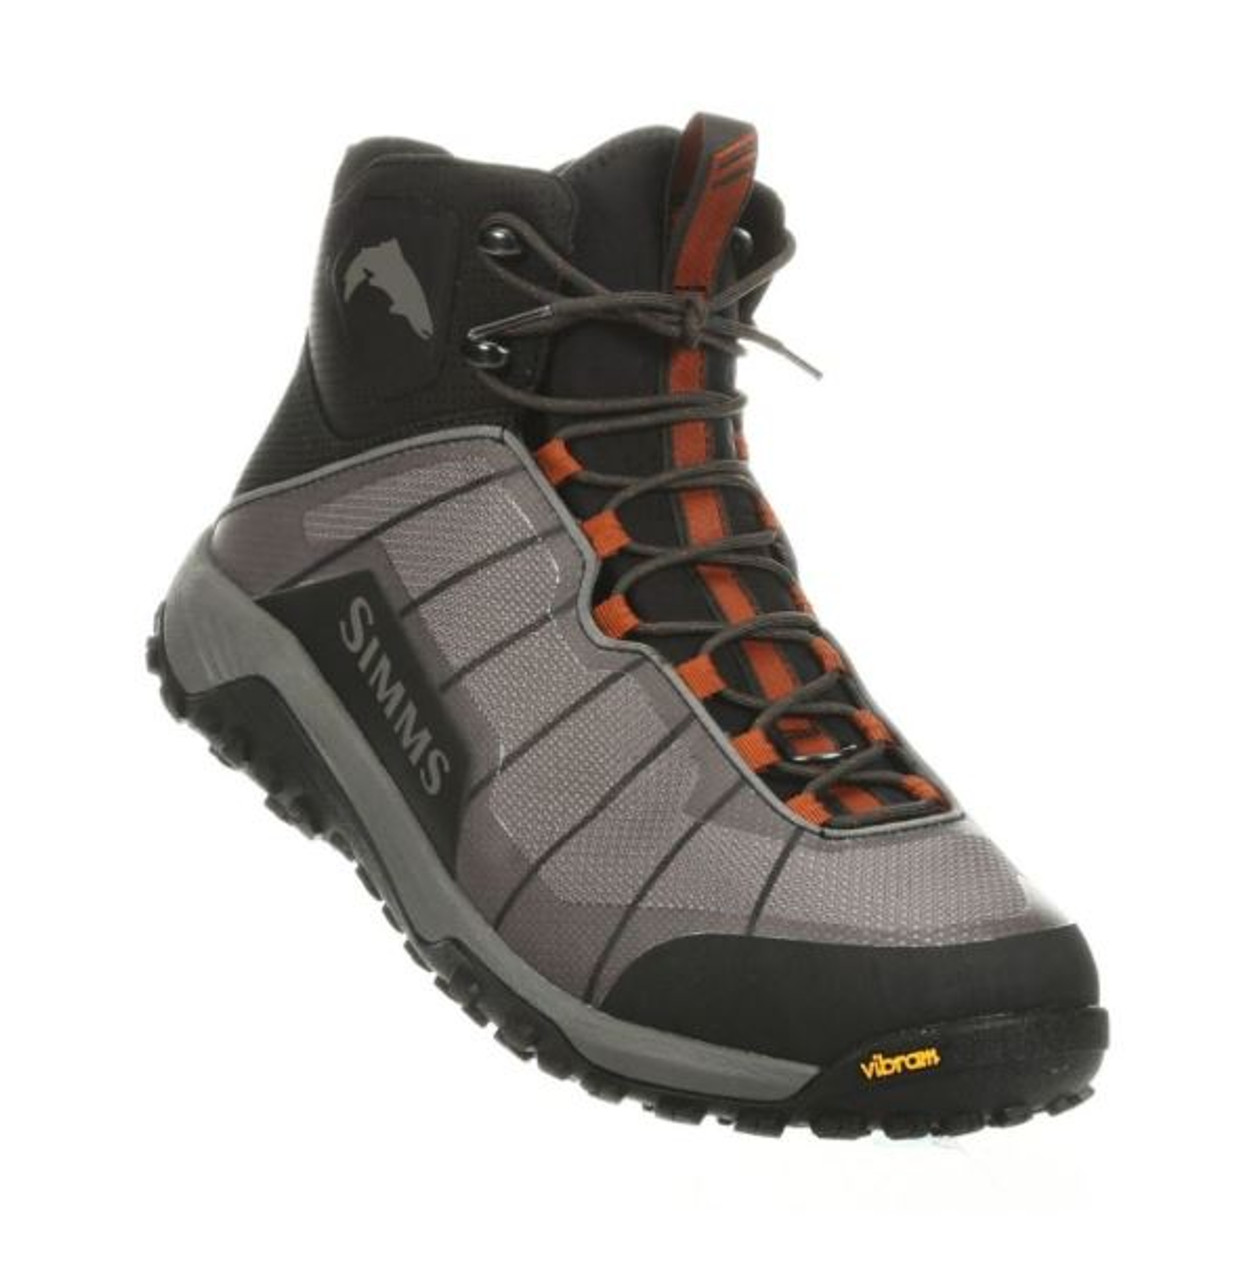 Flyweight Wading Boot - Vibram Sole (Size 14) - Steel Grey - Ramsey Outdoor